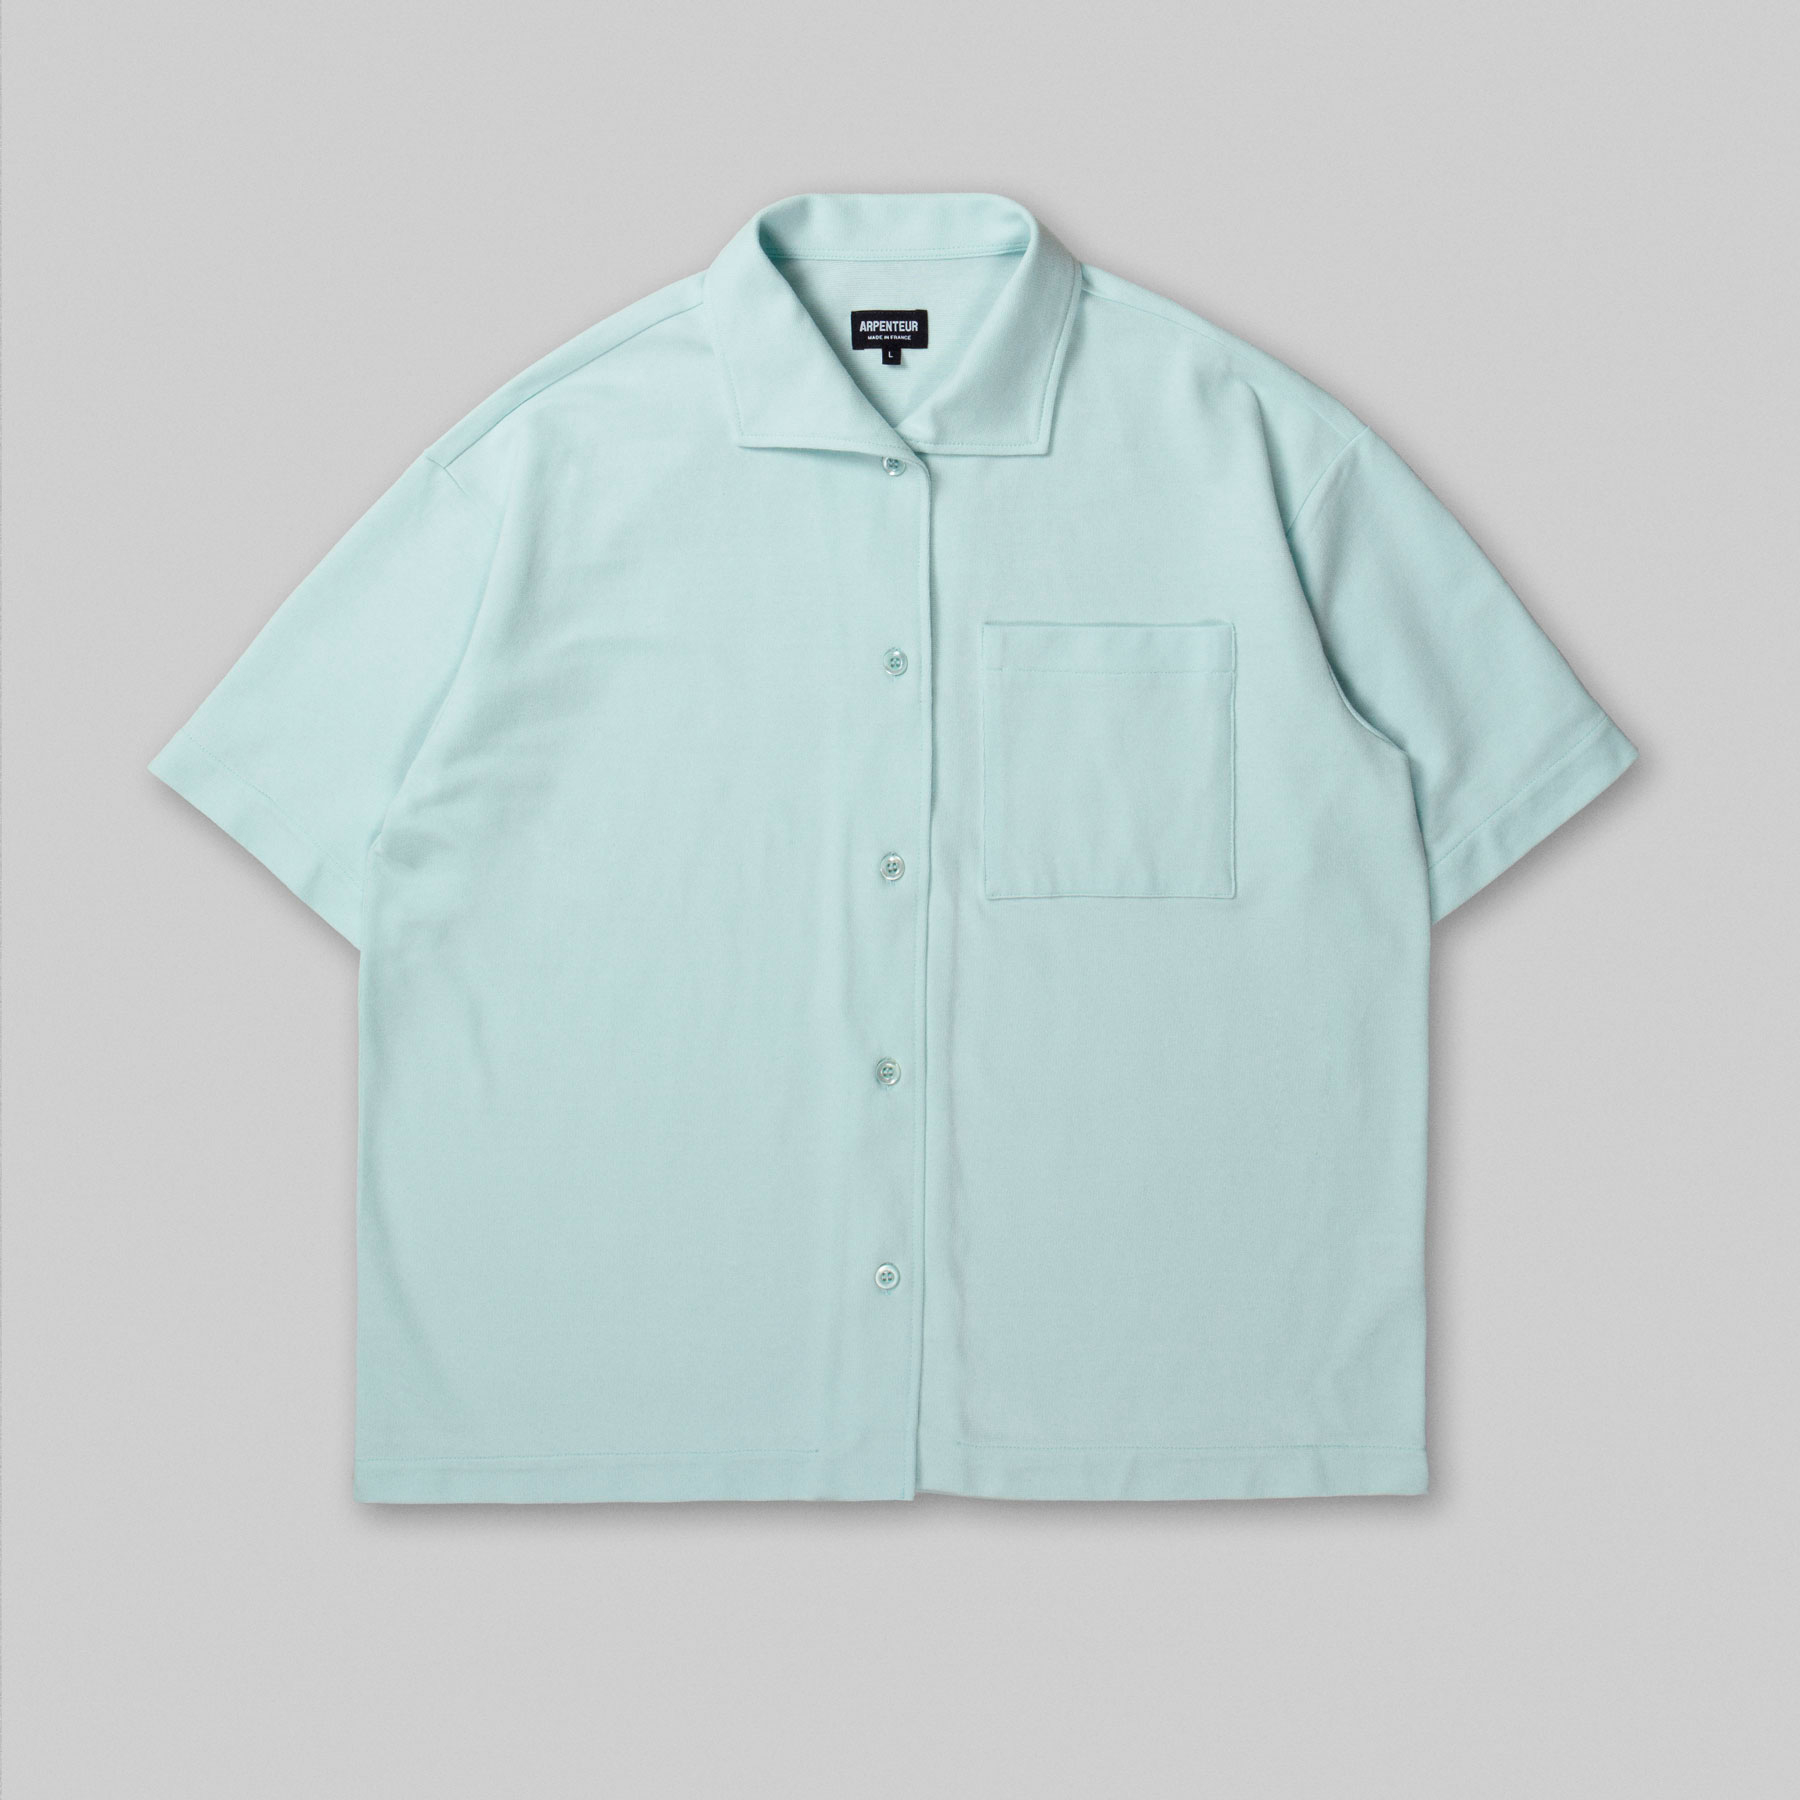 CORAL short sleeve shirt by Arpenteur in Pale cloud color